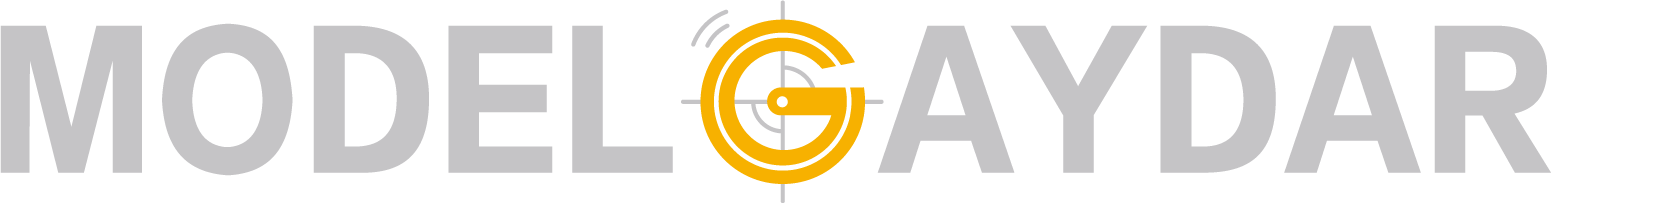 modelgaydar Logo